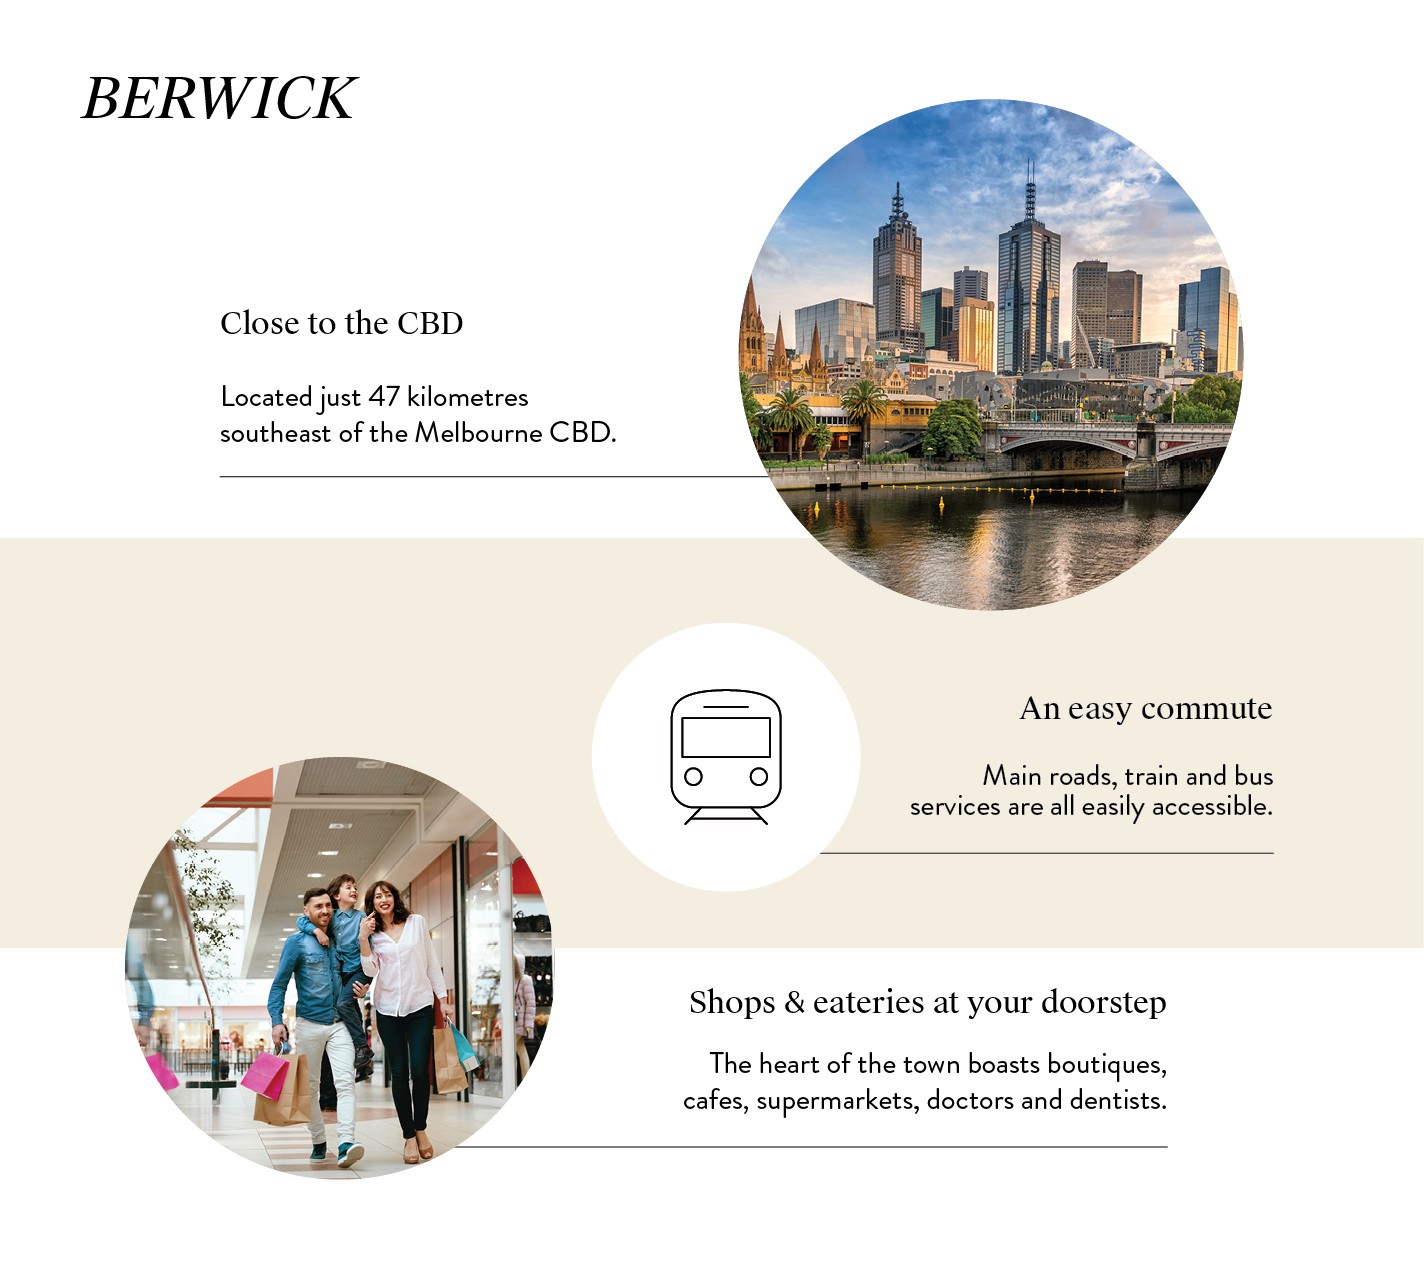 Discover-Berwick-Where-a-Better-Lifestyle-Awaits_body1.jpg